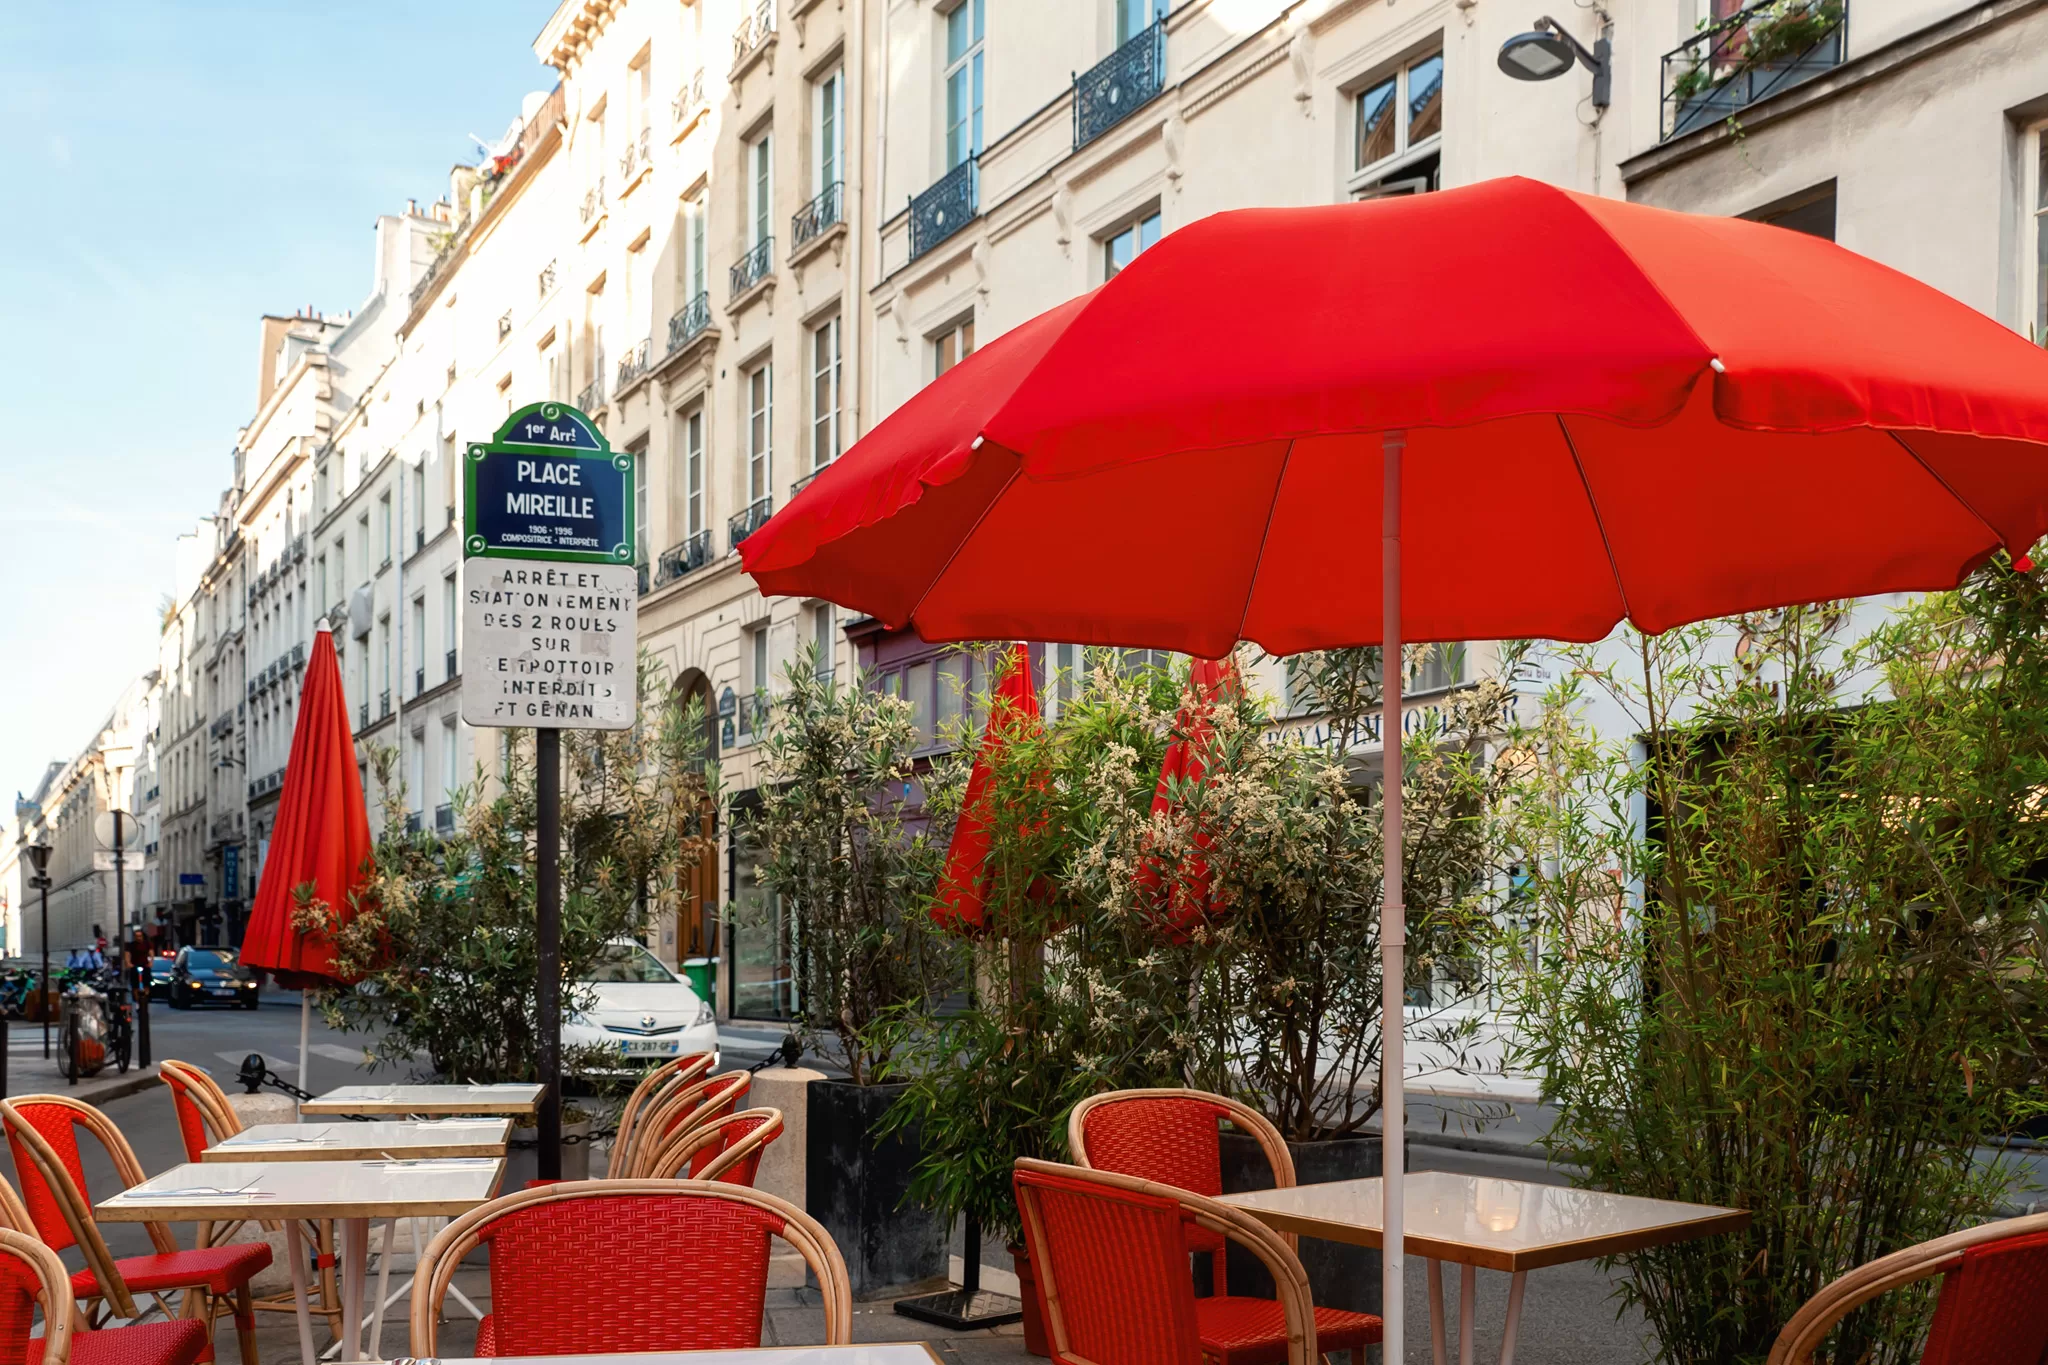 Red umbrellas at a cafe on rue de richelieu in Paris near our Paris Airbnb